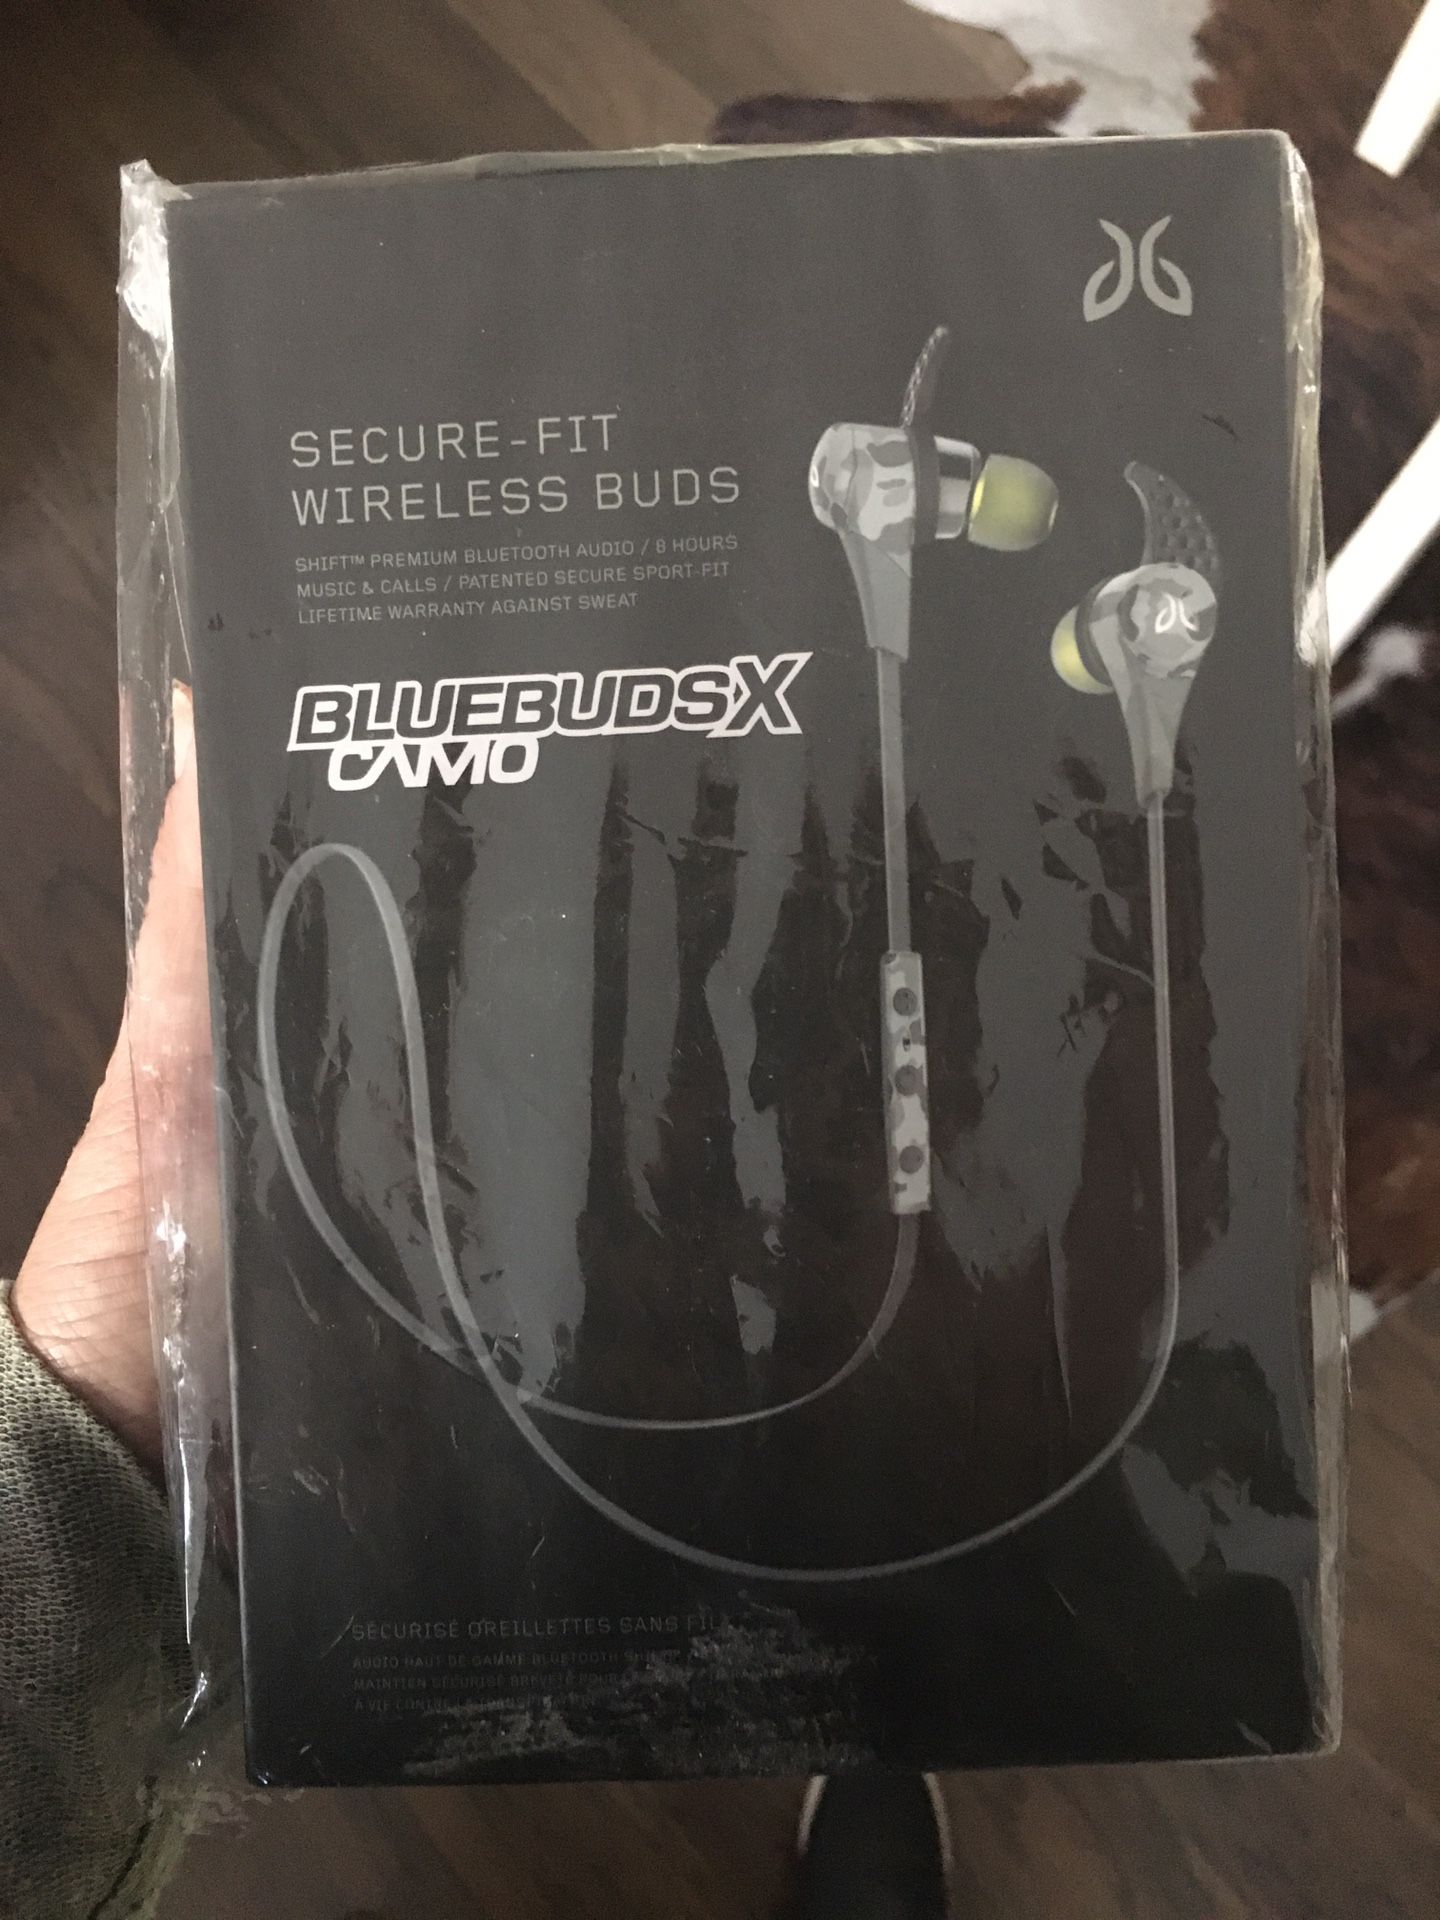 Jaybird Bluebuds X Wireless Buds - Camo Color - Brand New! $239 value!